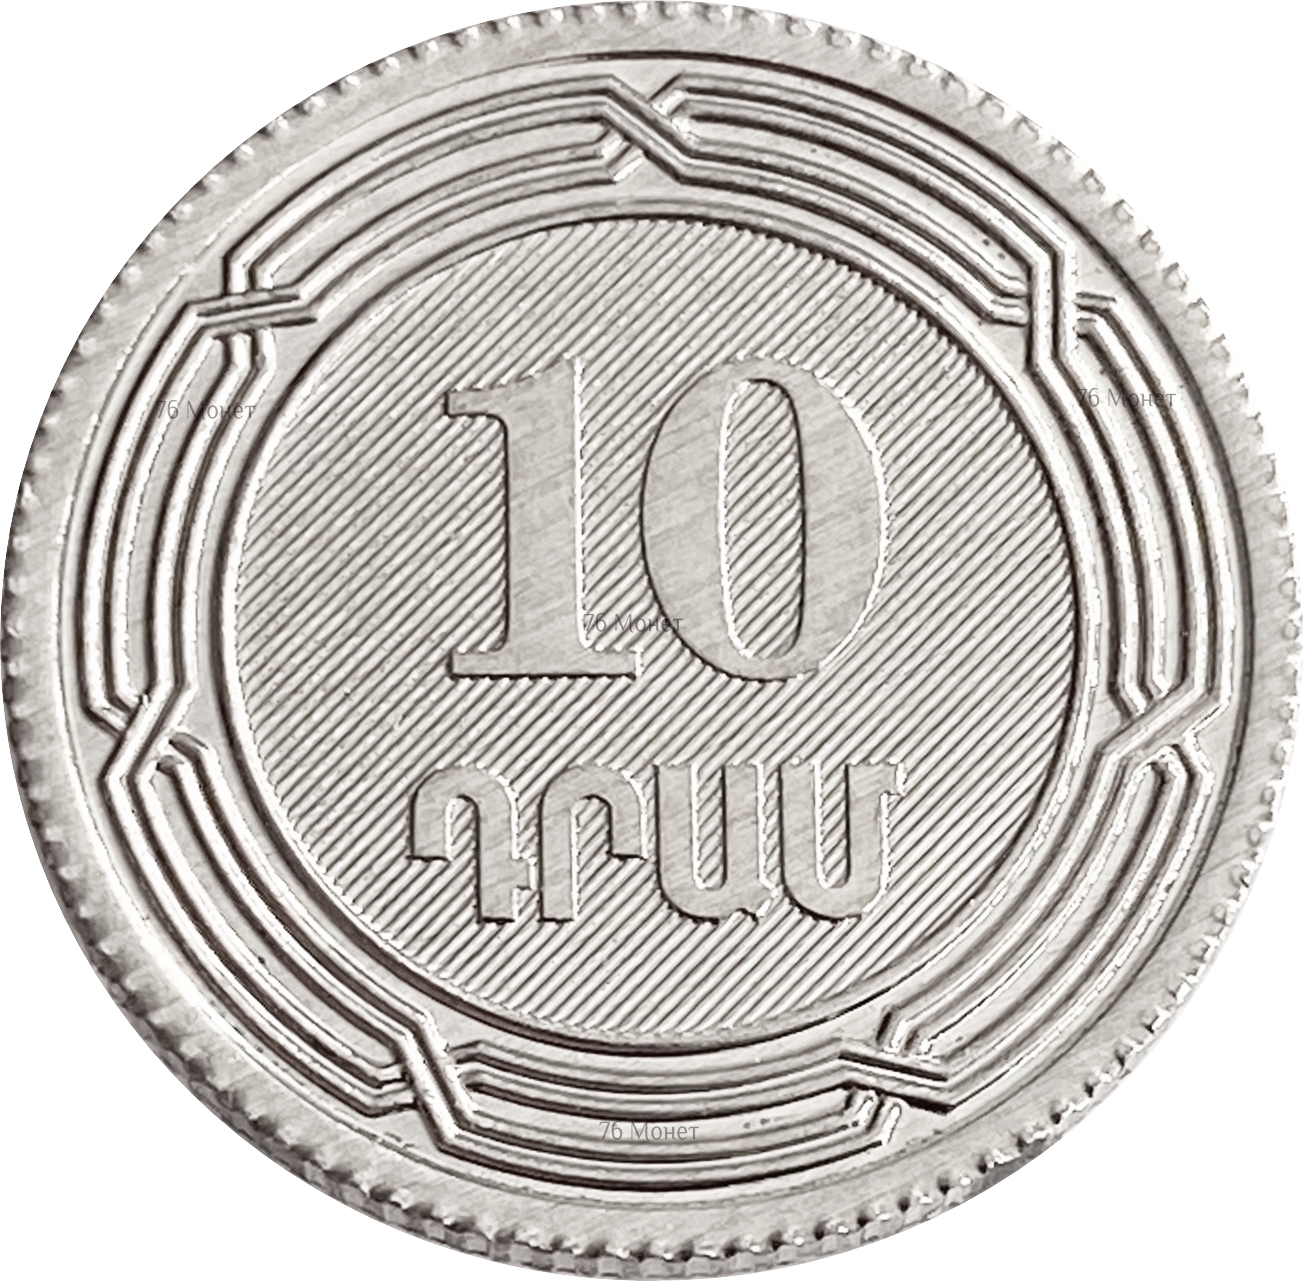 70000 драм в рублях. Армения, 10 драмов (2004 г.). Монета Армении 10. 10 Драм монета. Монета Армения 10 драмов.